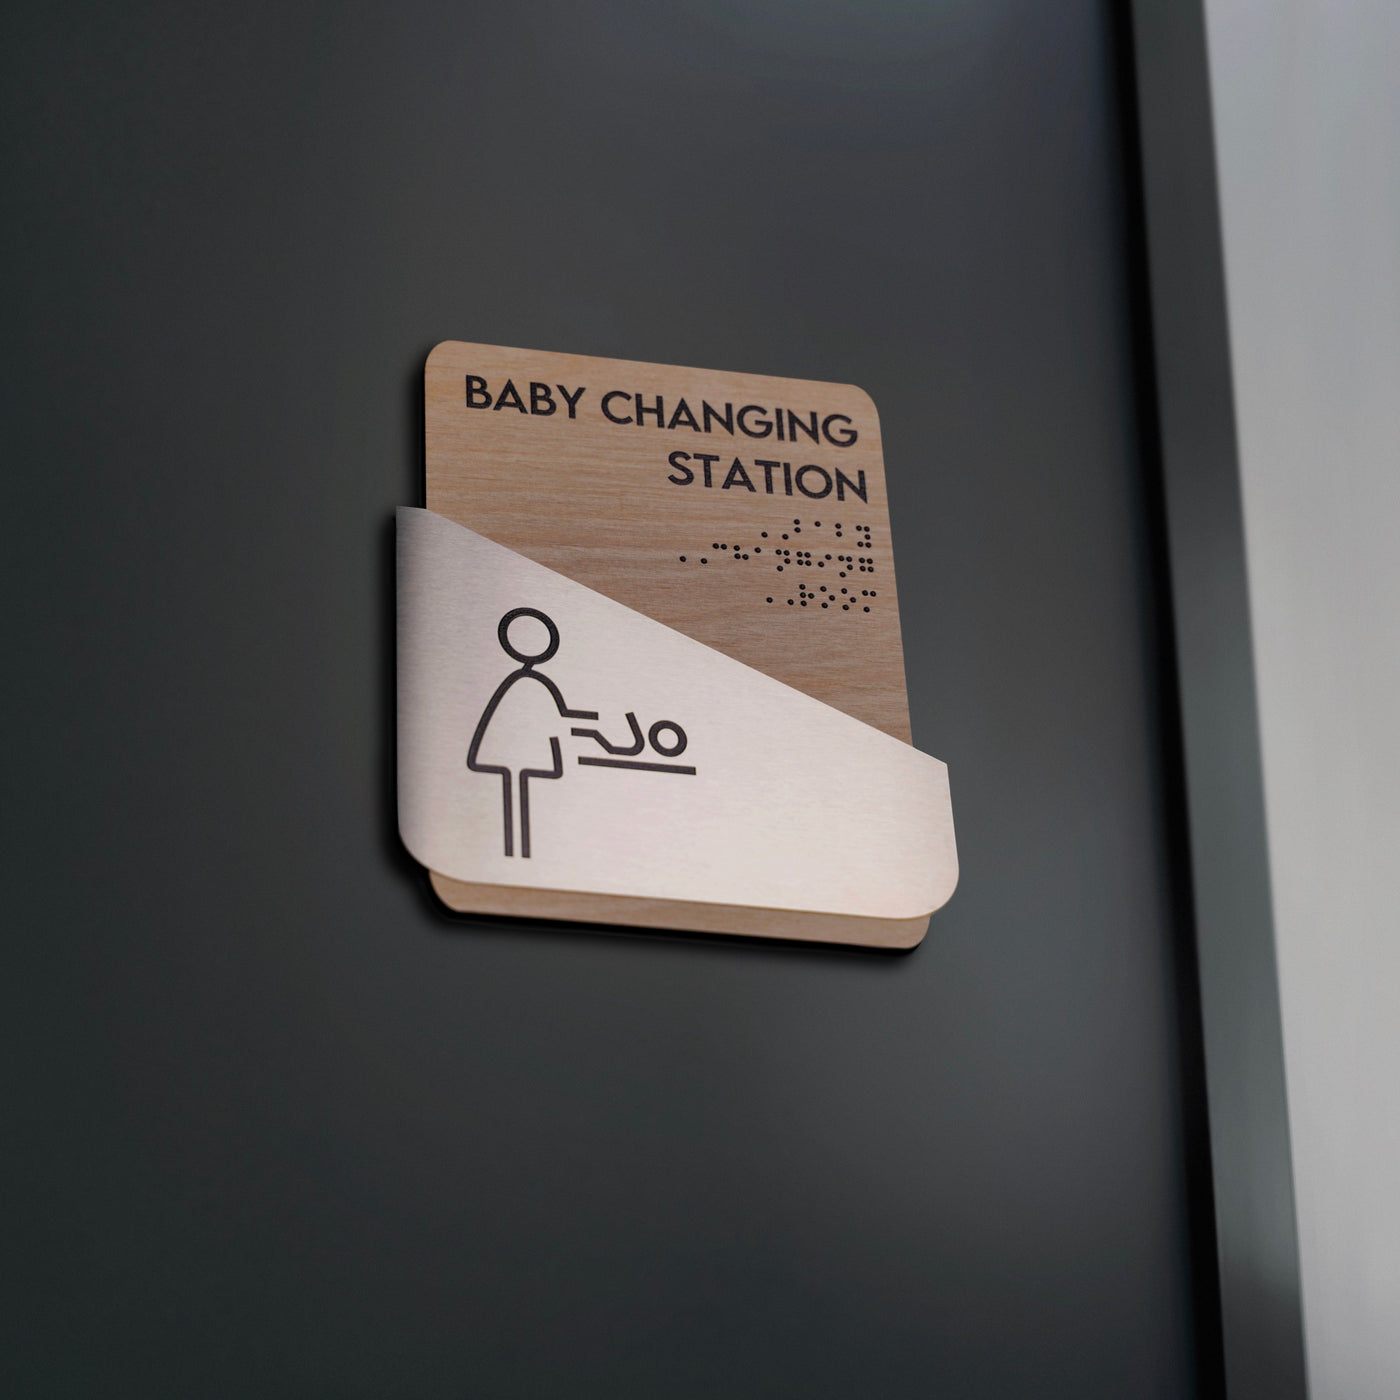 Bathroom Signs - Men's Restroom Sign: "Downhill" Design